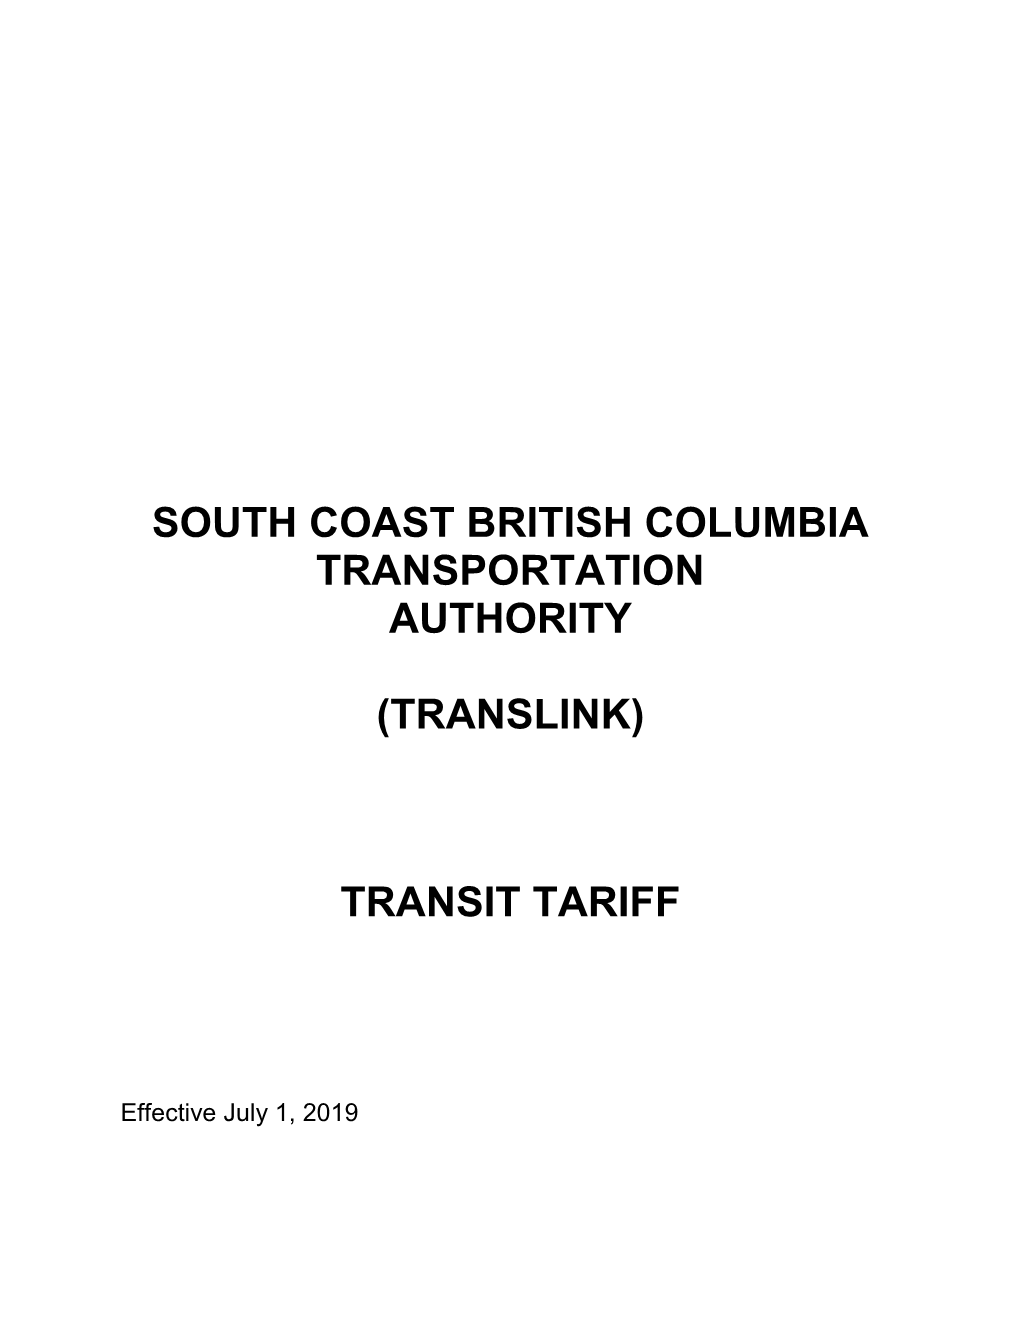 (Translink) Transit Tariff